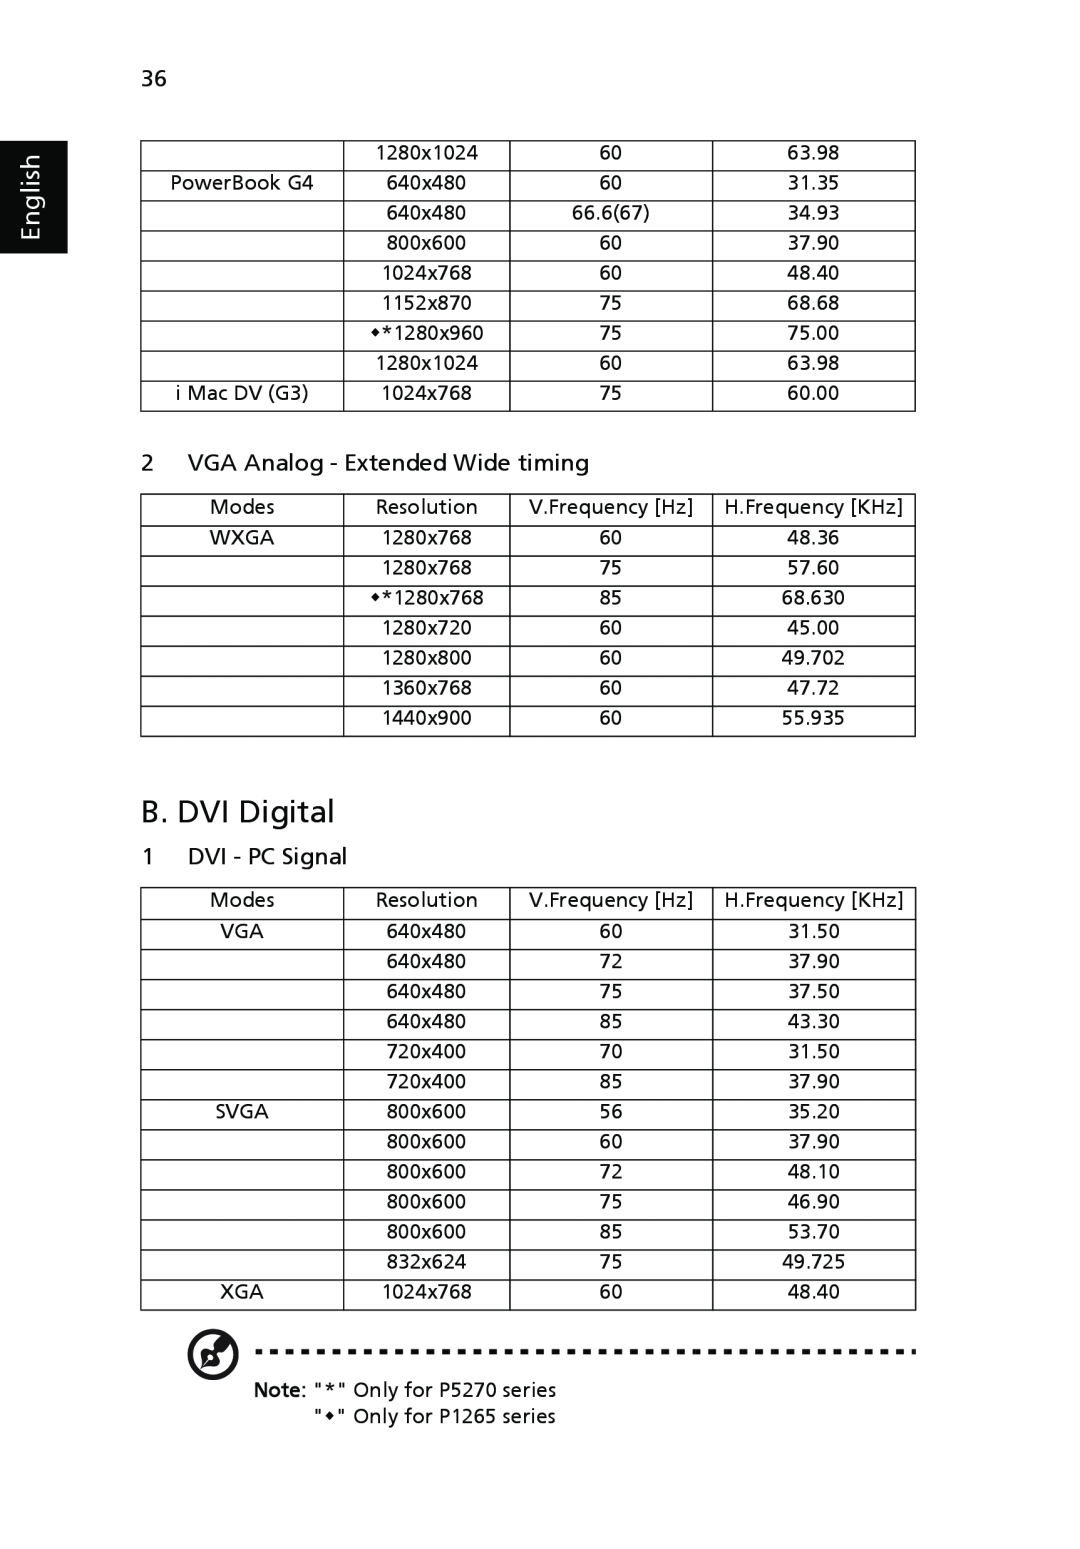 Acer P1265, P5270 manual B. DVI Digital, VGA Analog - Extended Wide timing, DVI - PC Signal, English 